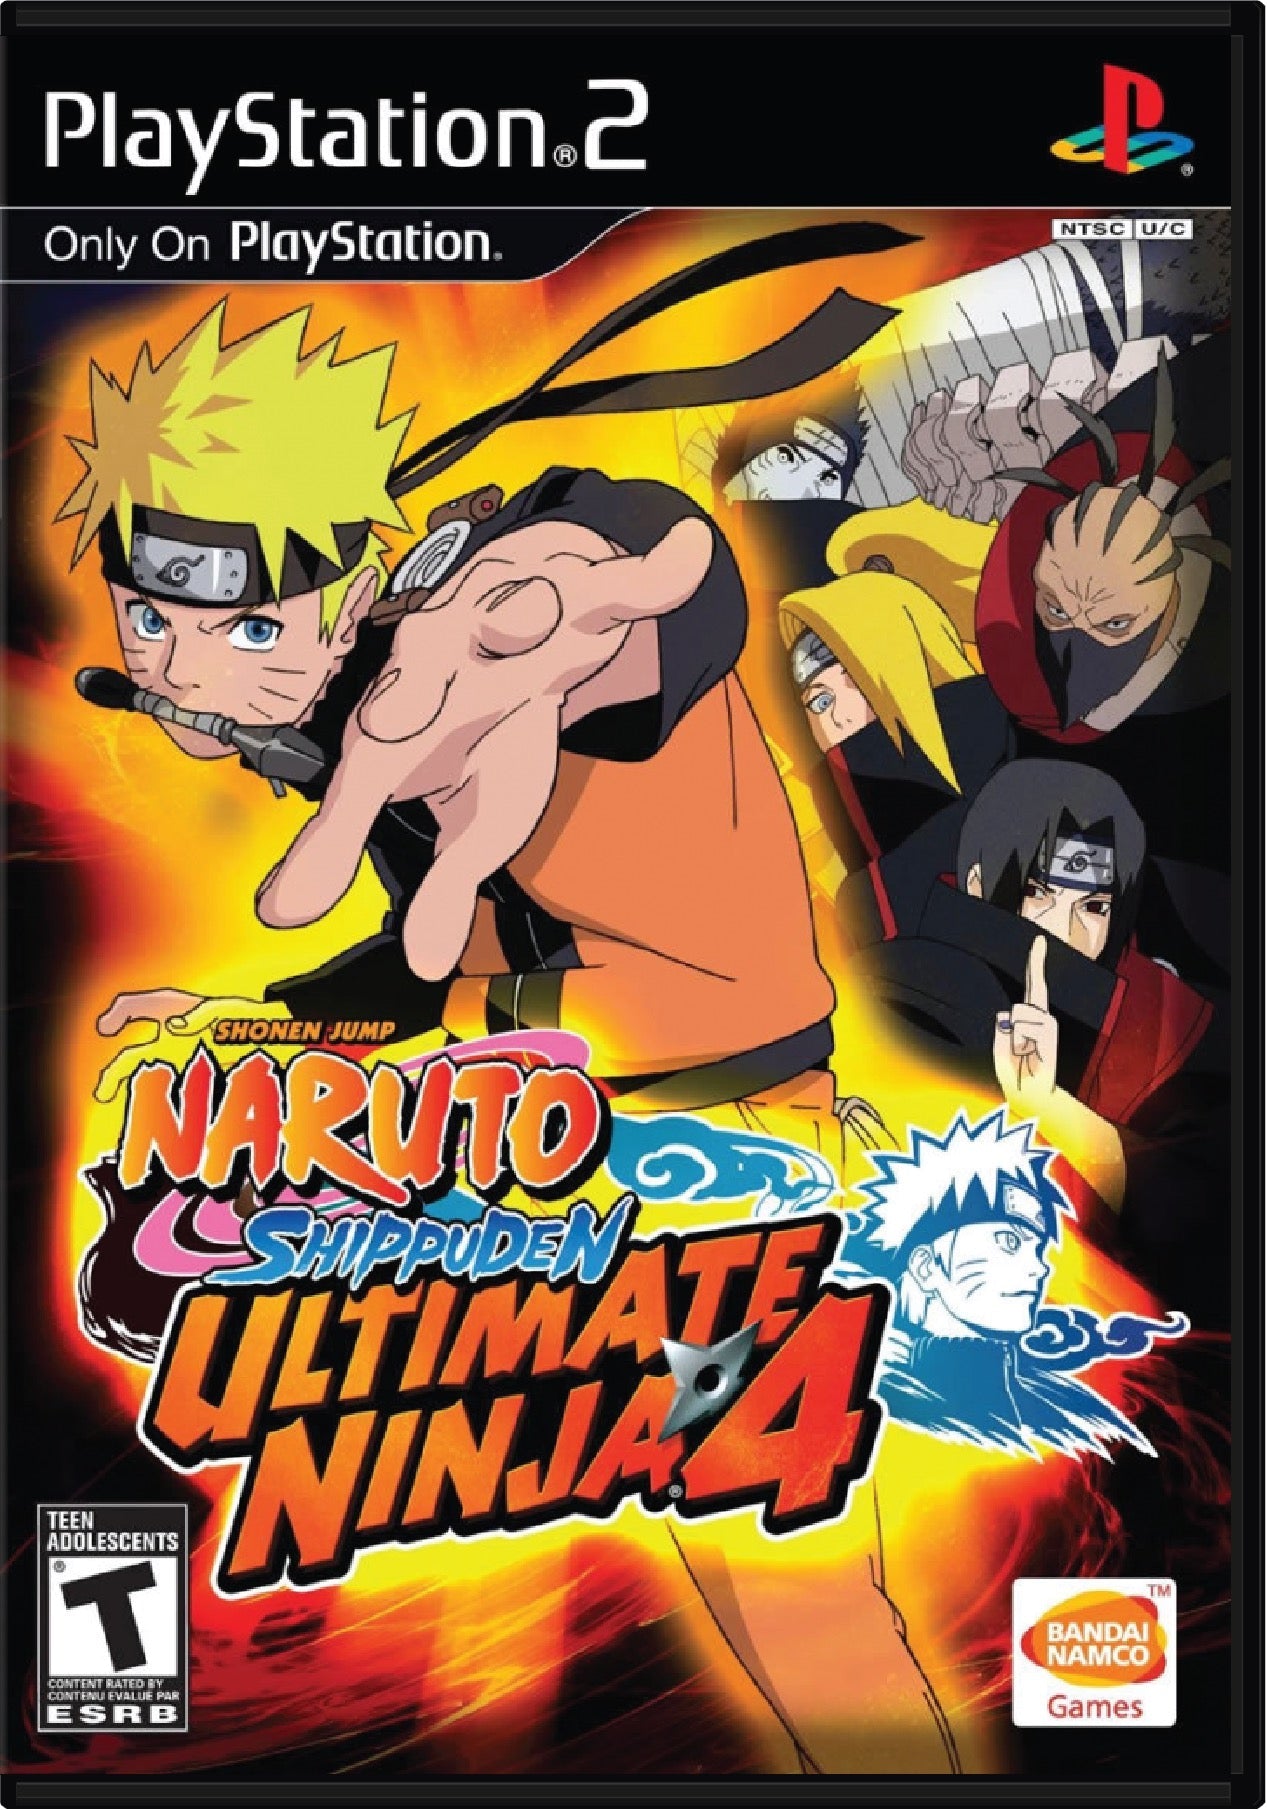 Ultimate Ninja 4 Naruto Shippuden Cover Art and Product Photo